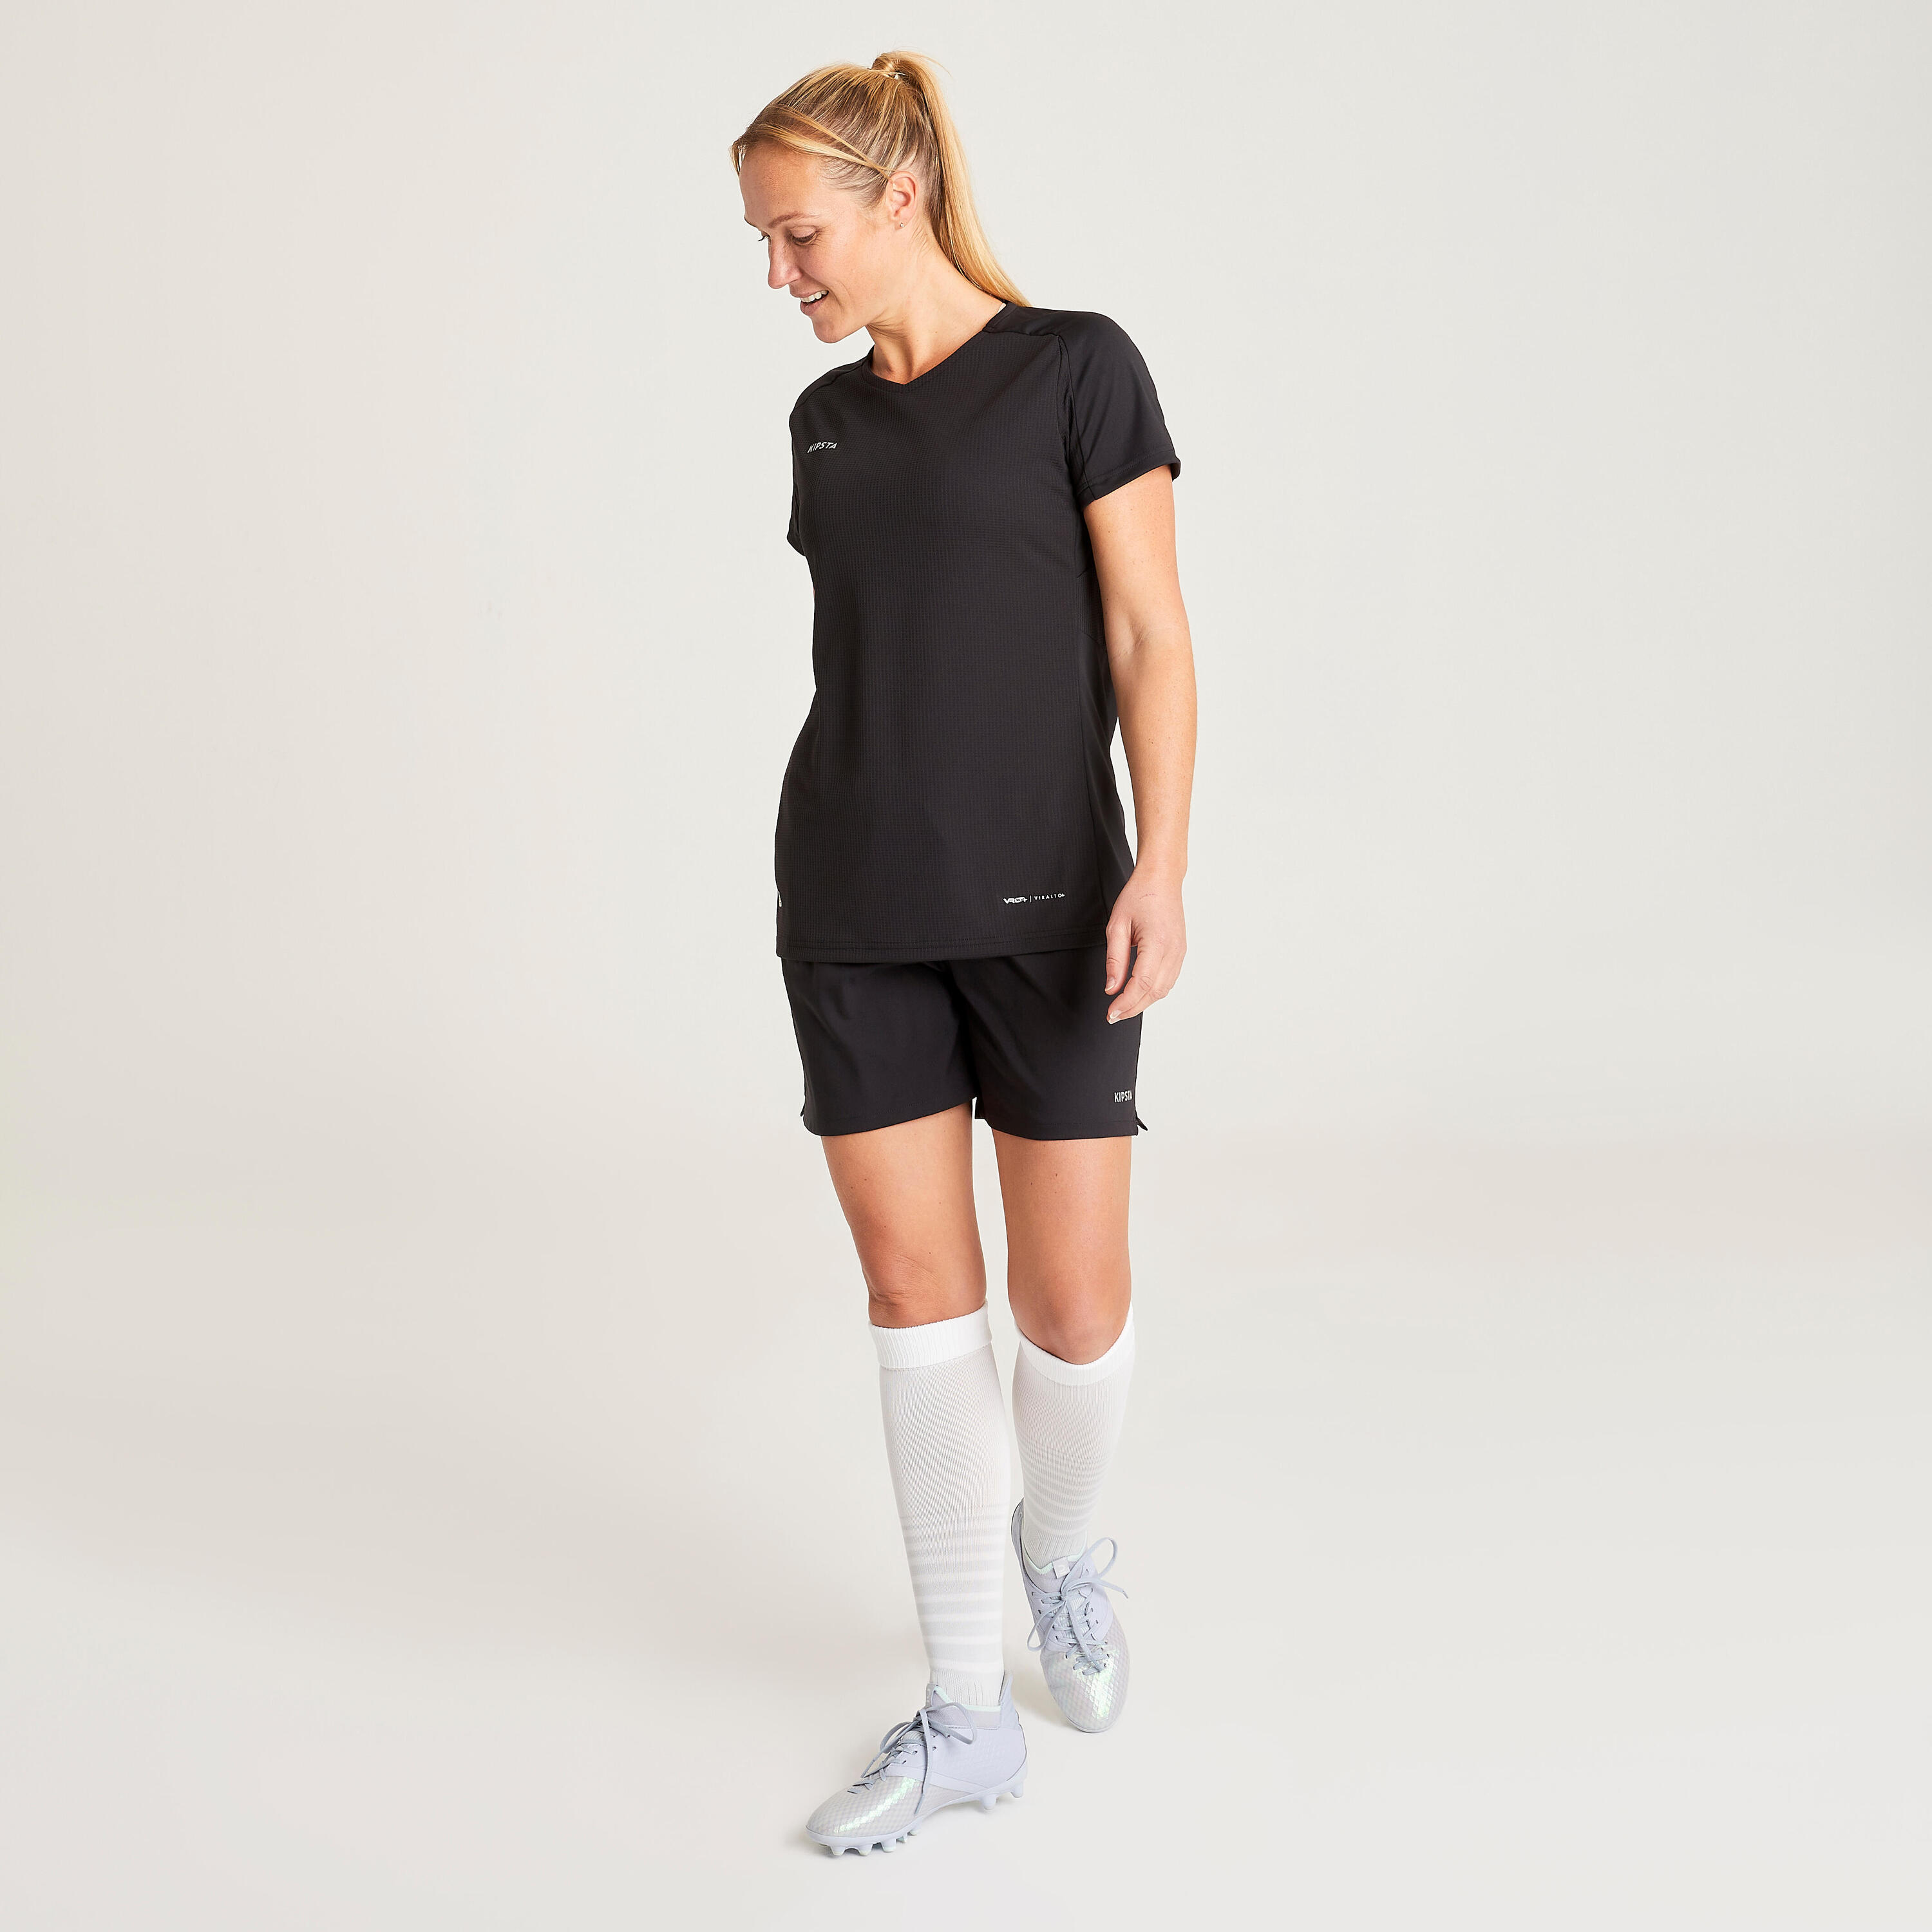 Women's Plain Football Shirt - Black 17/29